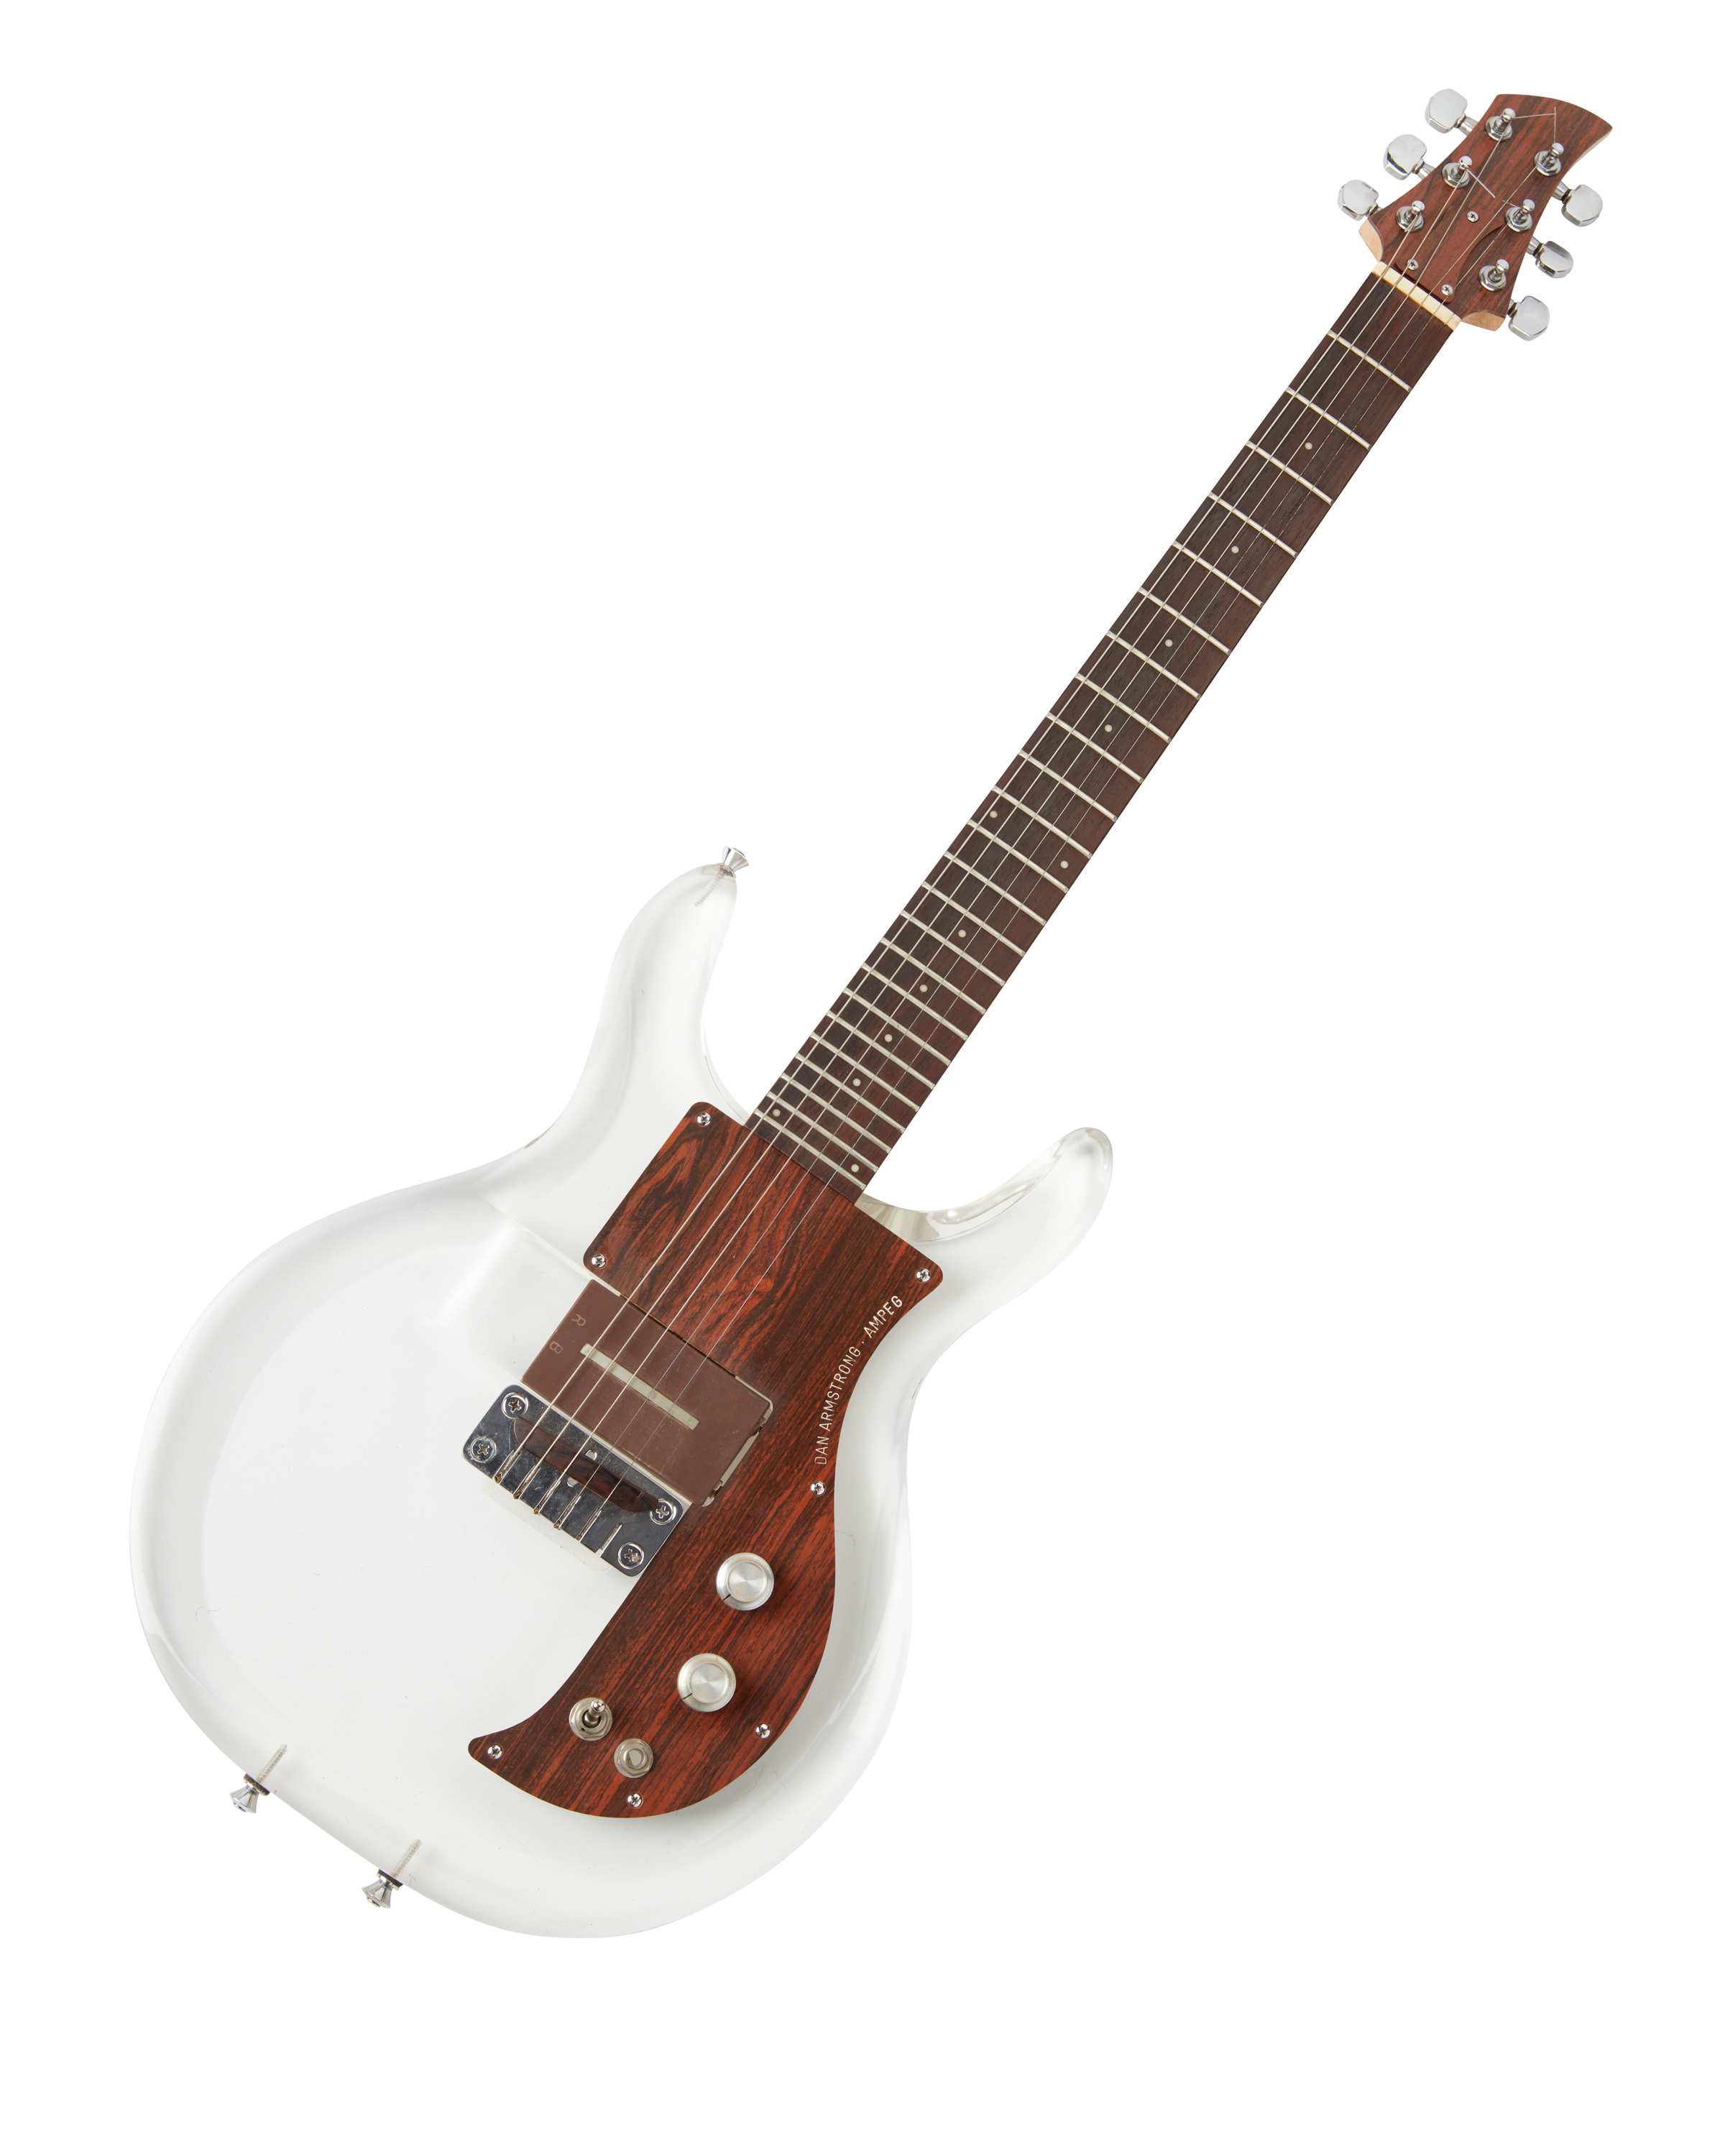 Ampeg Dan Armstrong lucite electric guitar, est. $2,000-$3,000  